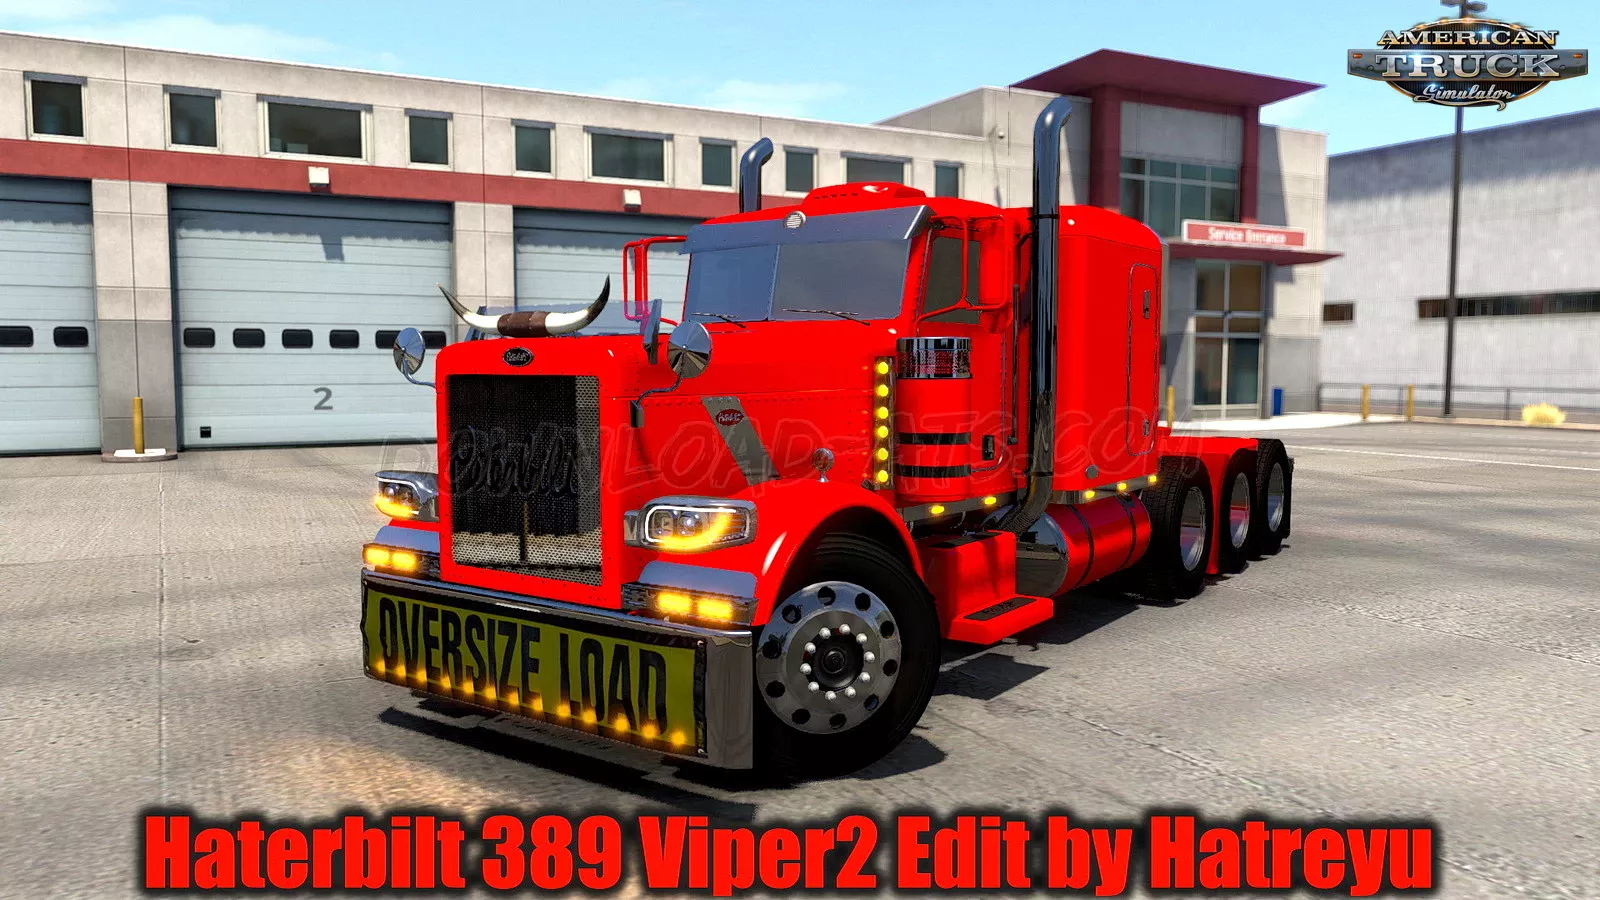 Haterbilt 389 Viper2 v4.7.2 Edit by Hatreyu (1.50.x) for ATS